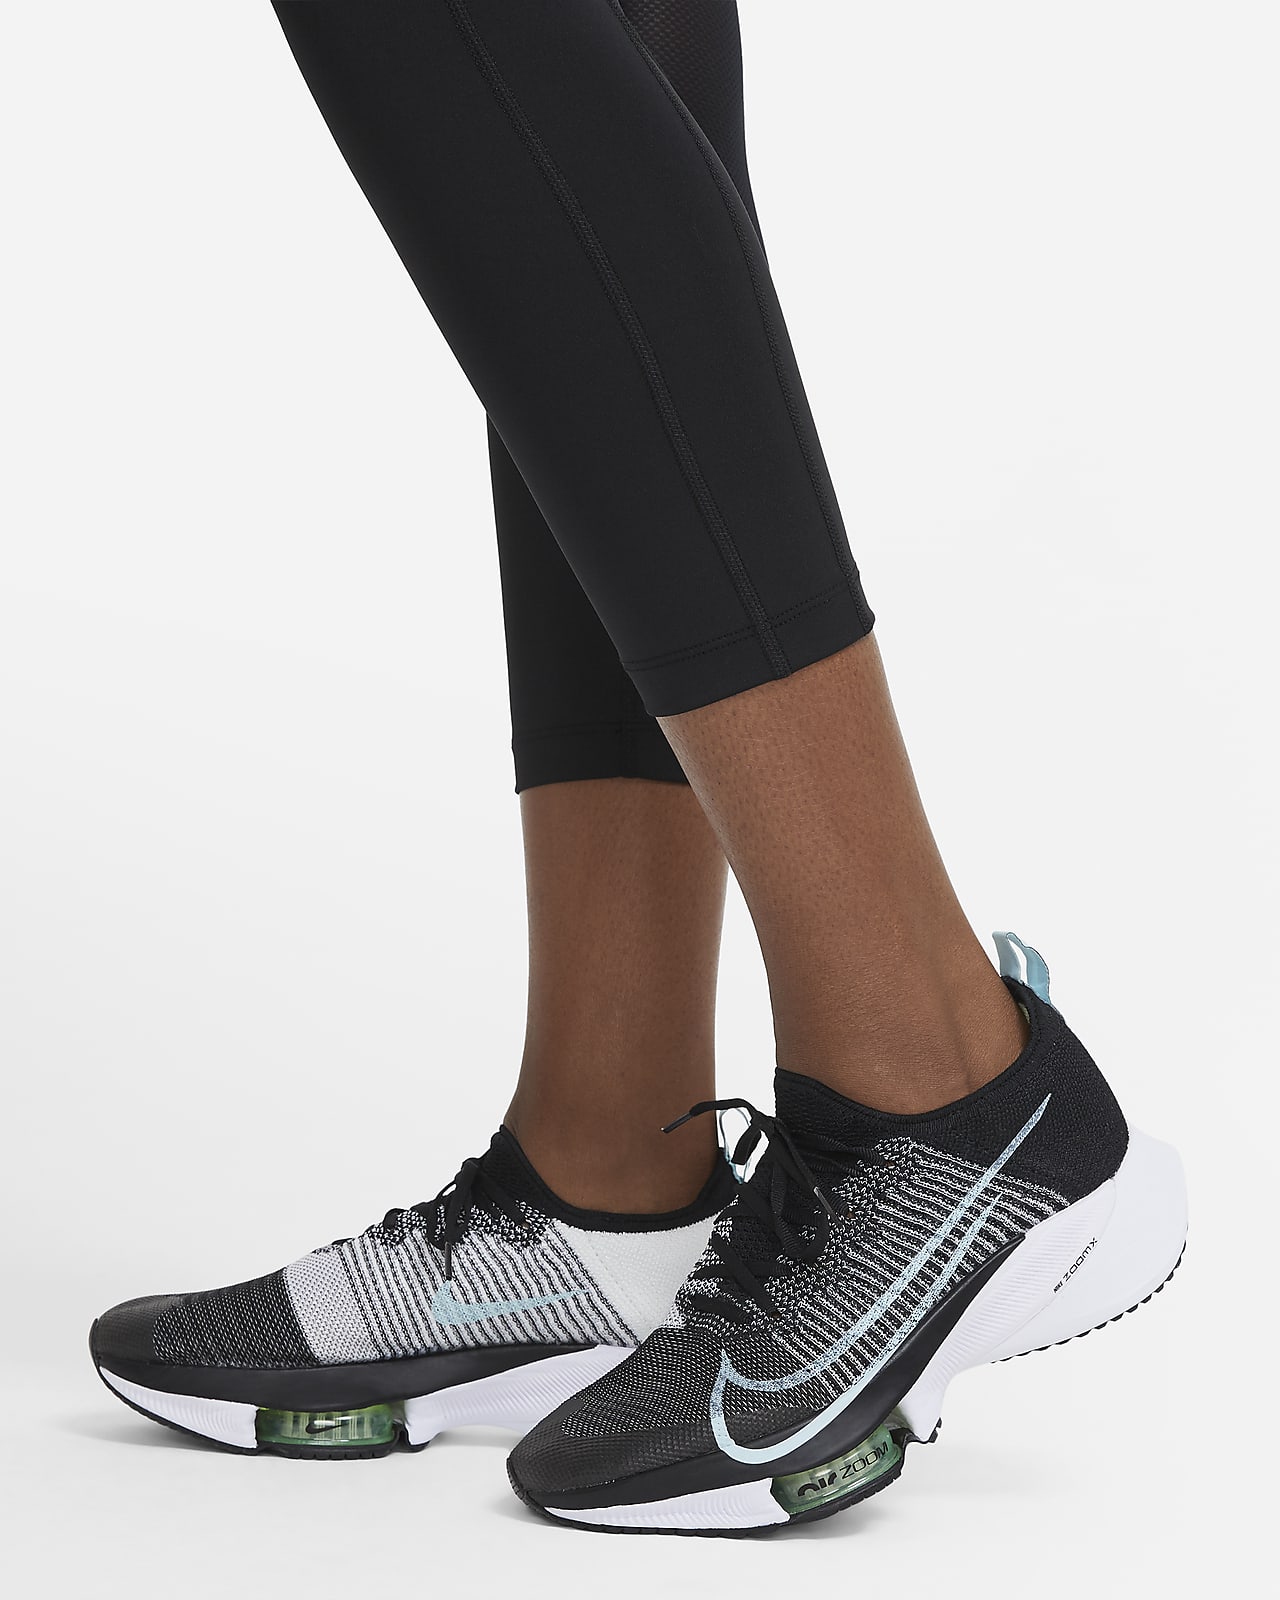 Nike Womens Pants Adult Small Black Dri-FIt 7/8 Running Fast Crop WorkOut  Ladies